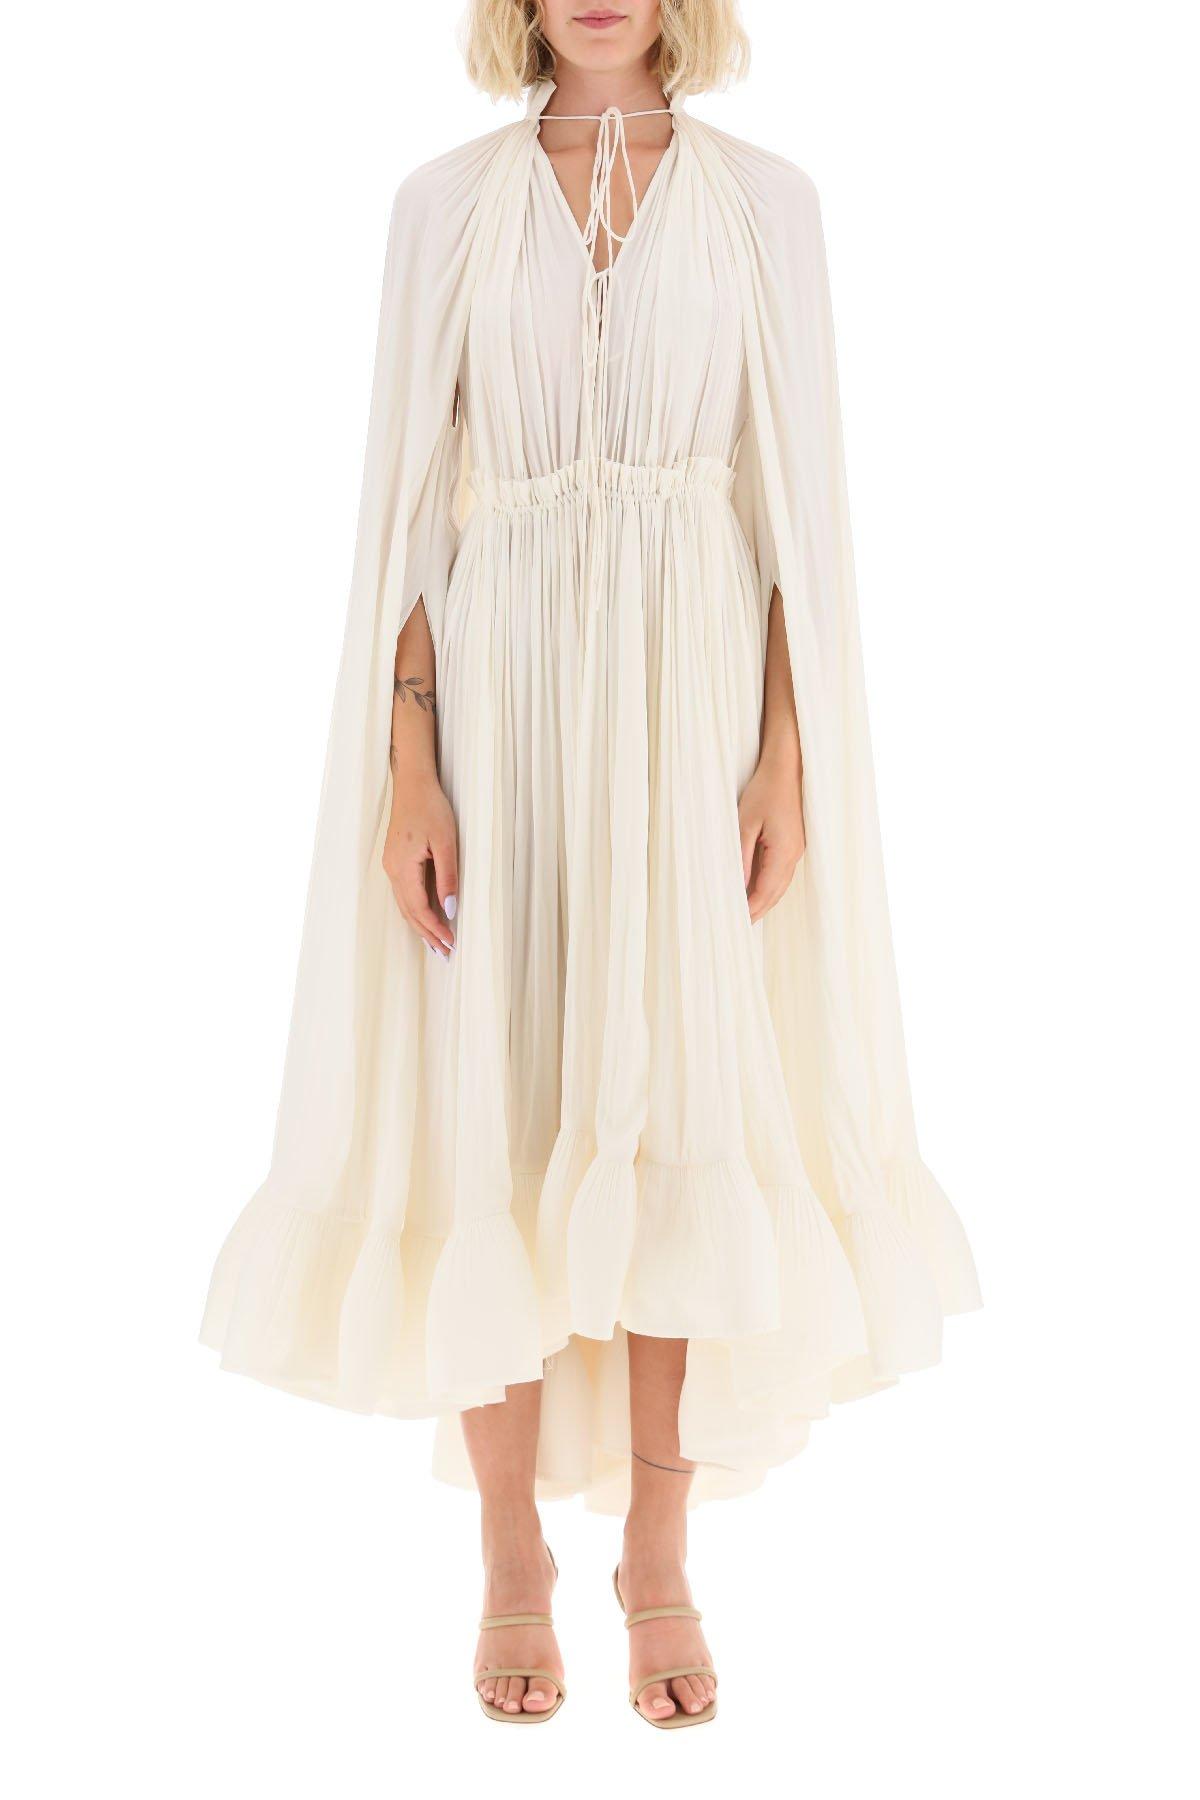 Lanvin Cape Style Ruffled Dress in White - Lyst